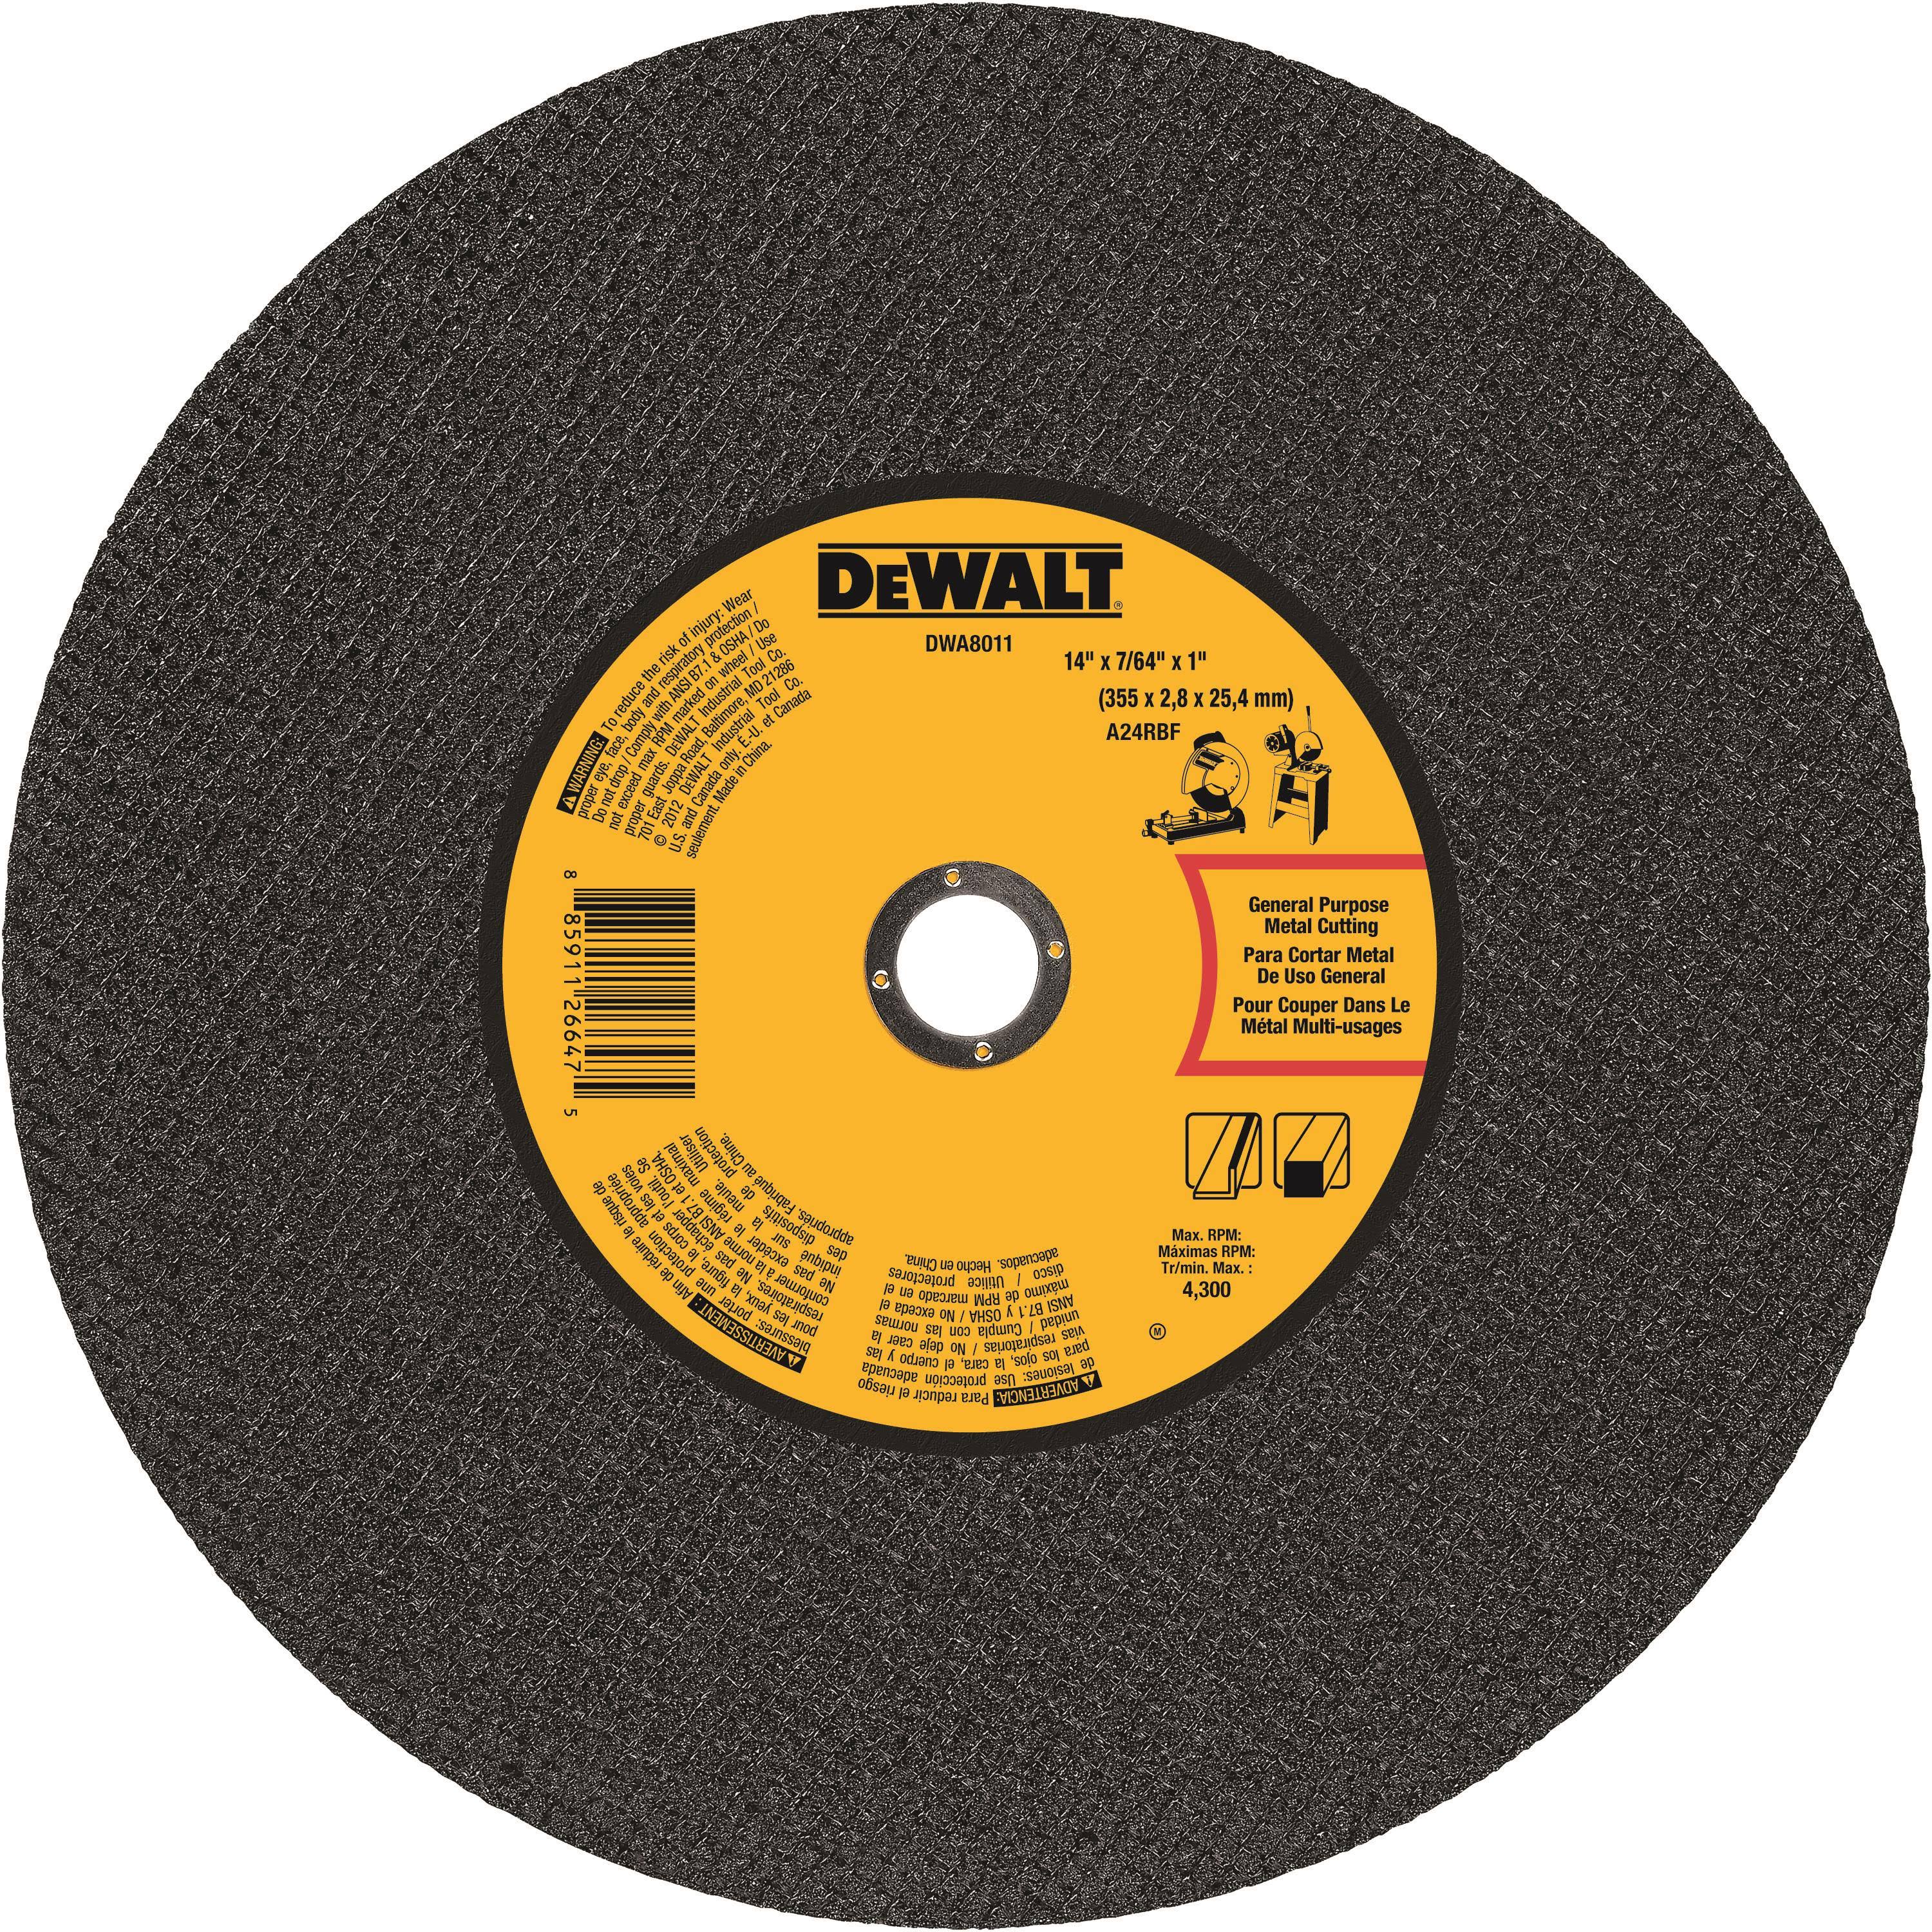 Dewalt DWA8011 Gen. Purpose Chop Saw Wheel - 14-" x 7/64" x 1"